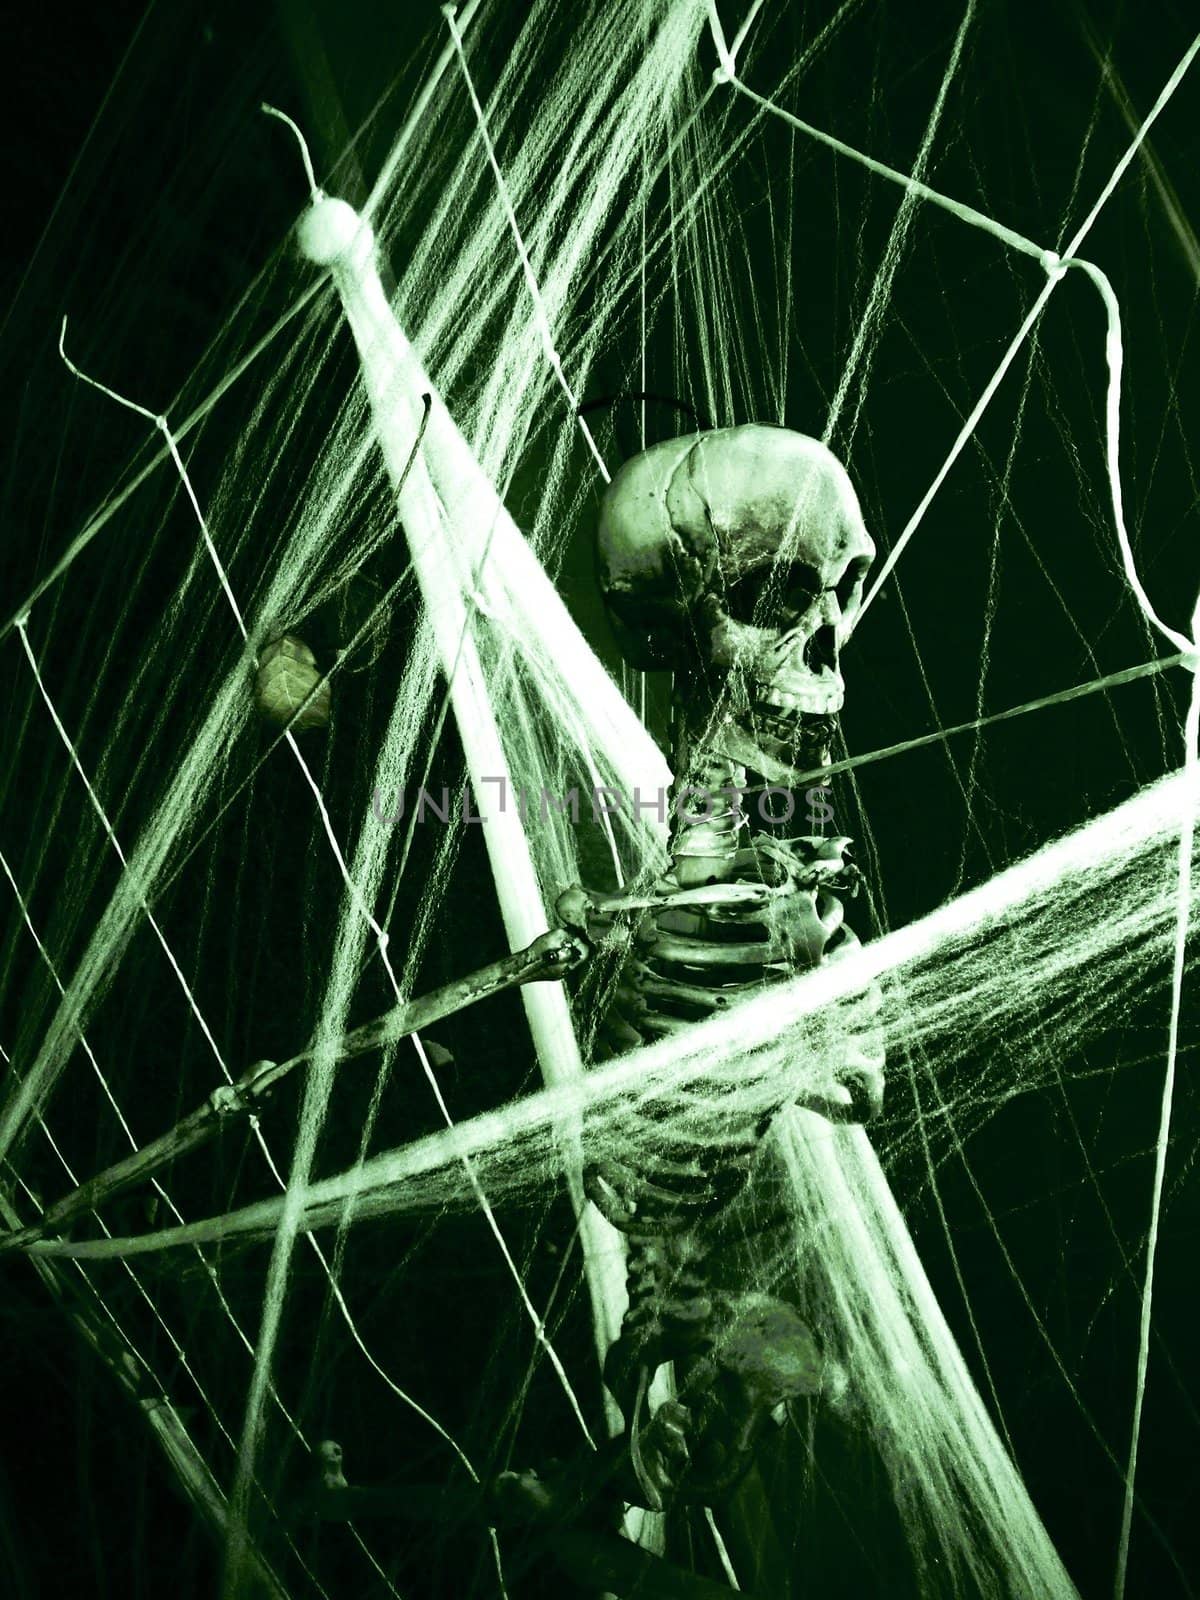 Skeleton stuck in a Web on Halloween